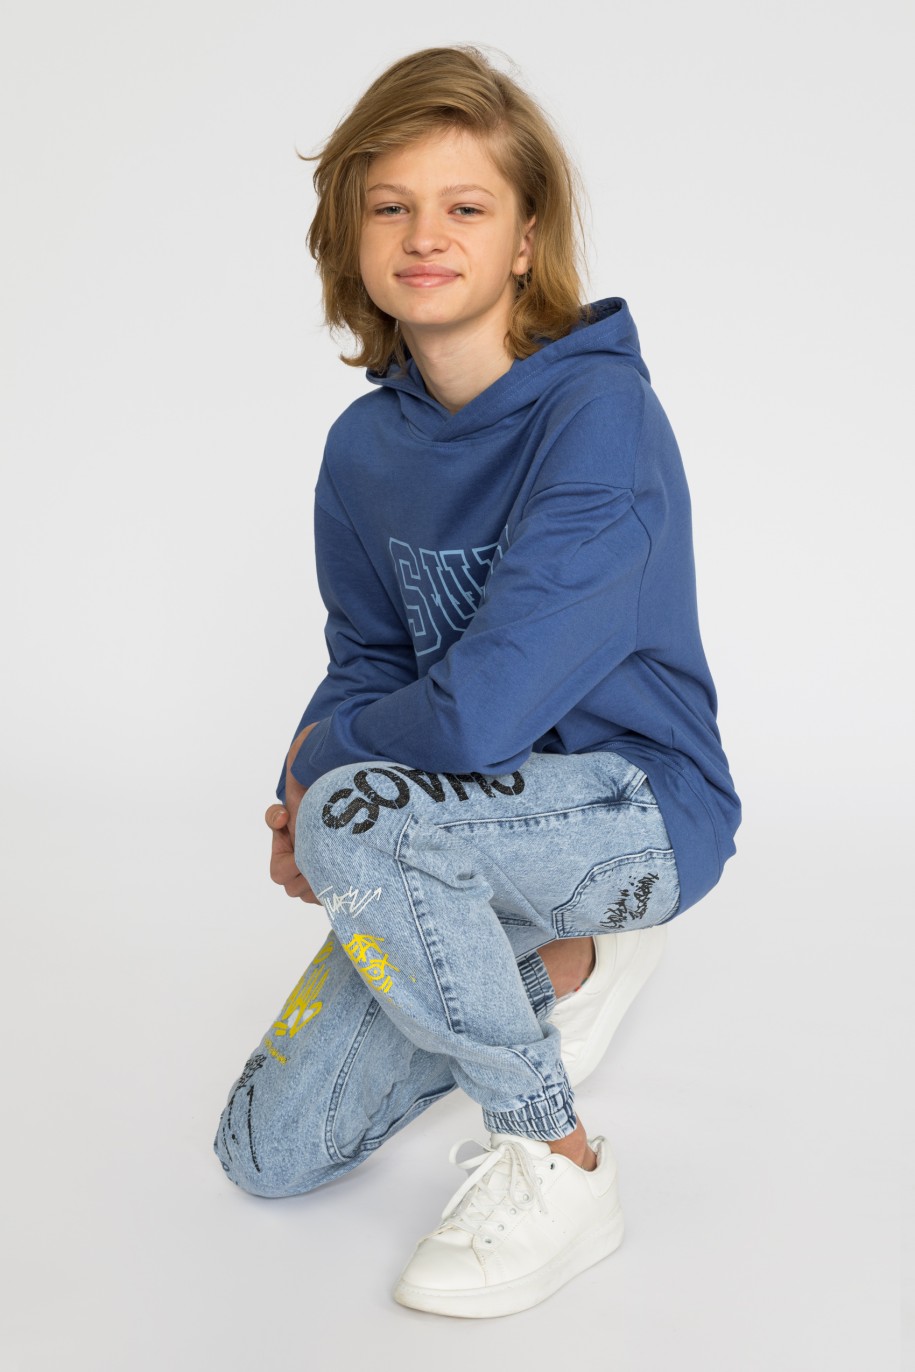 Granatowa bluza z kapturem dla chłopaka SURE - 33314